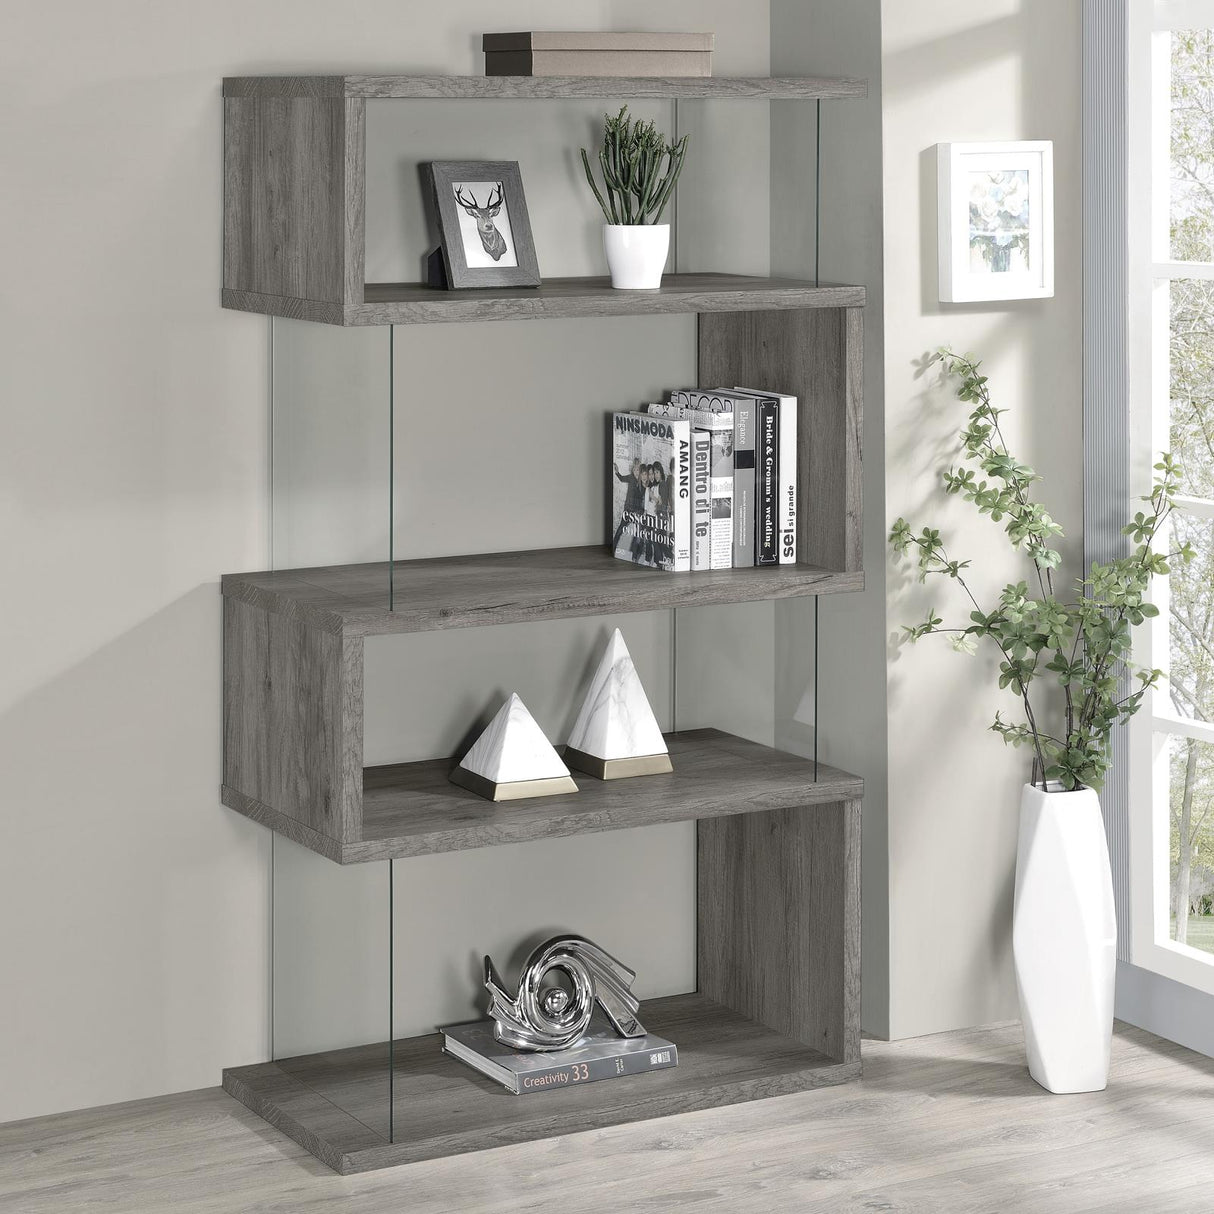 Emelle 4-shelf Bookcase with Glass Panels - 802340 - Luna Furniture